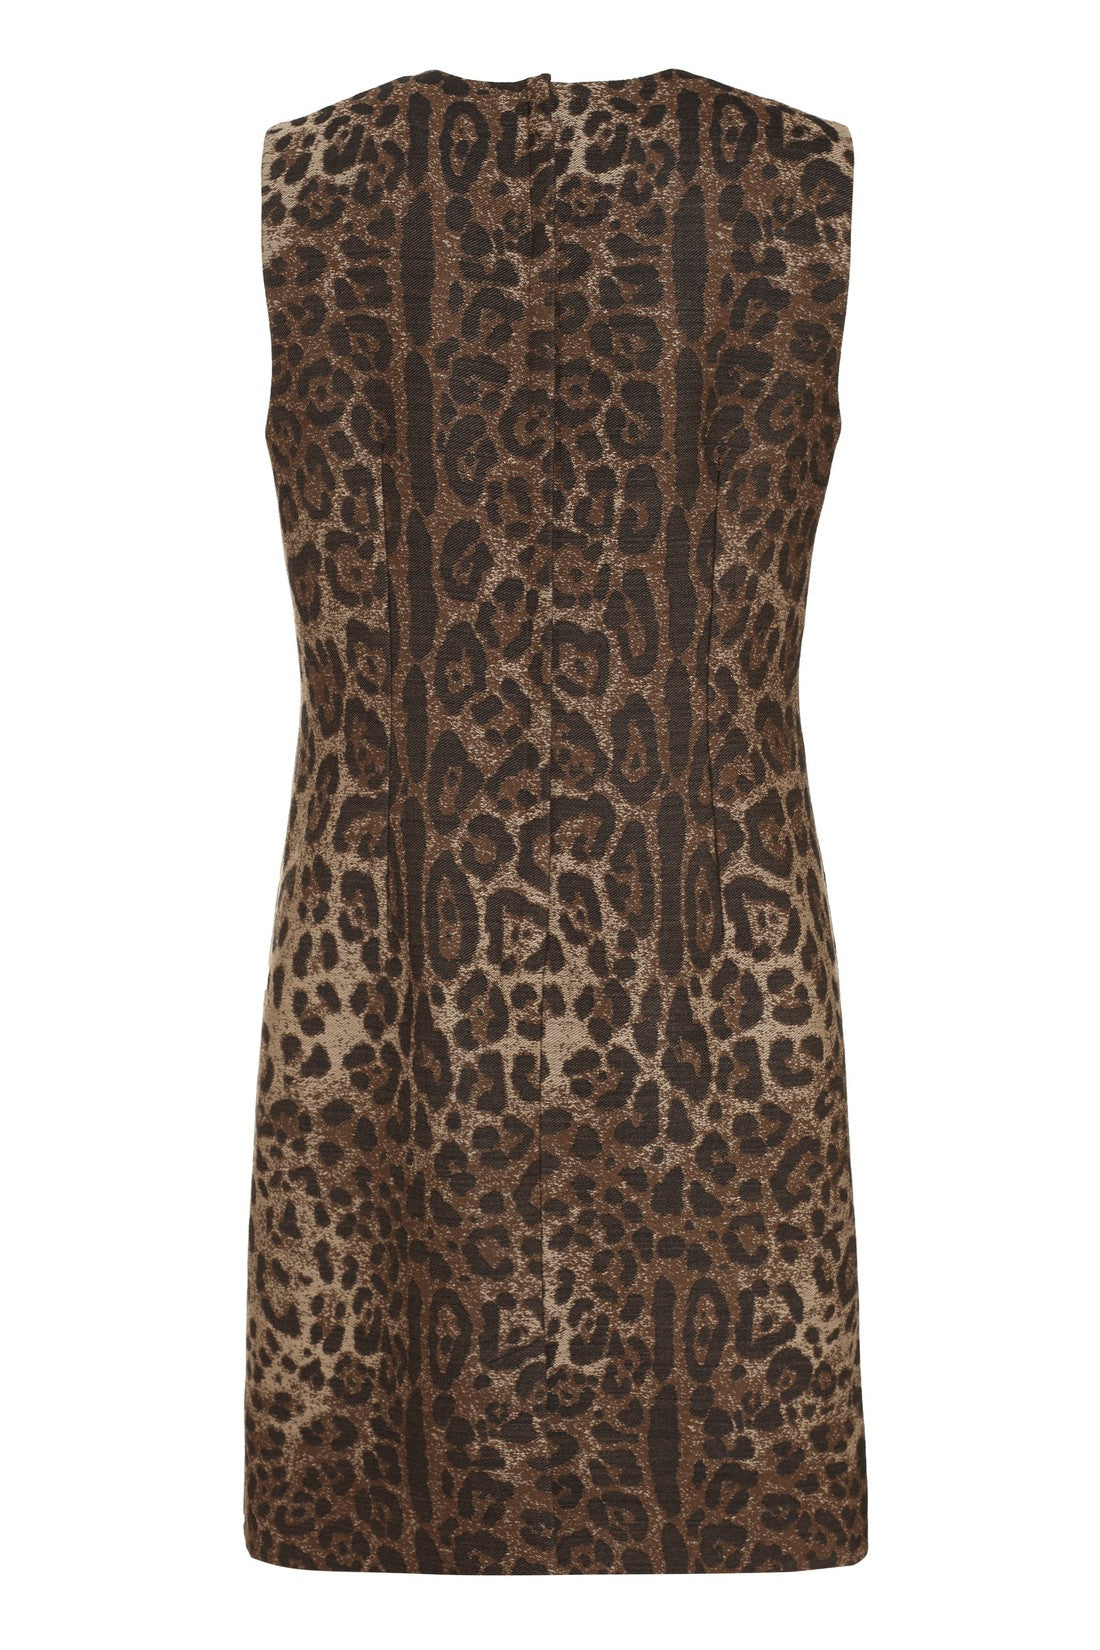 Dolce & Gabbana-OUTLET-SALE-Wool midi dress-ARCHIVIST